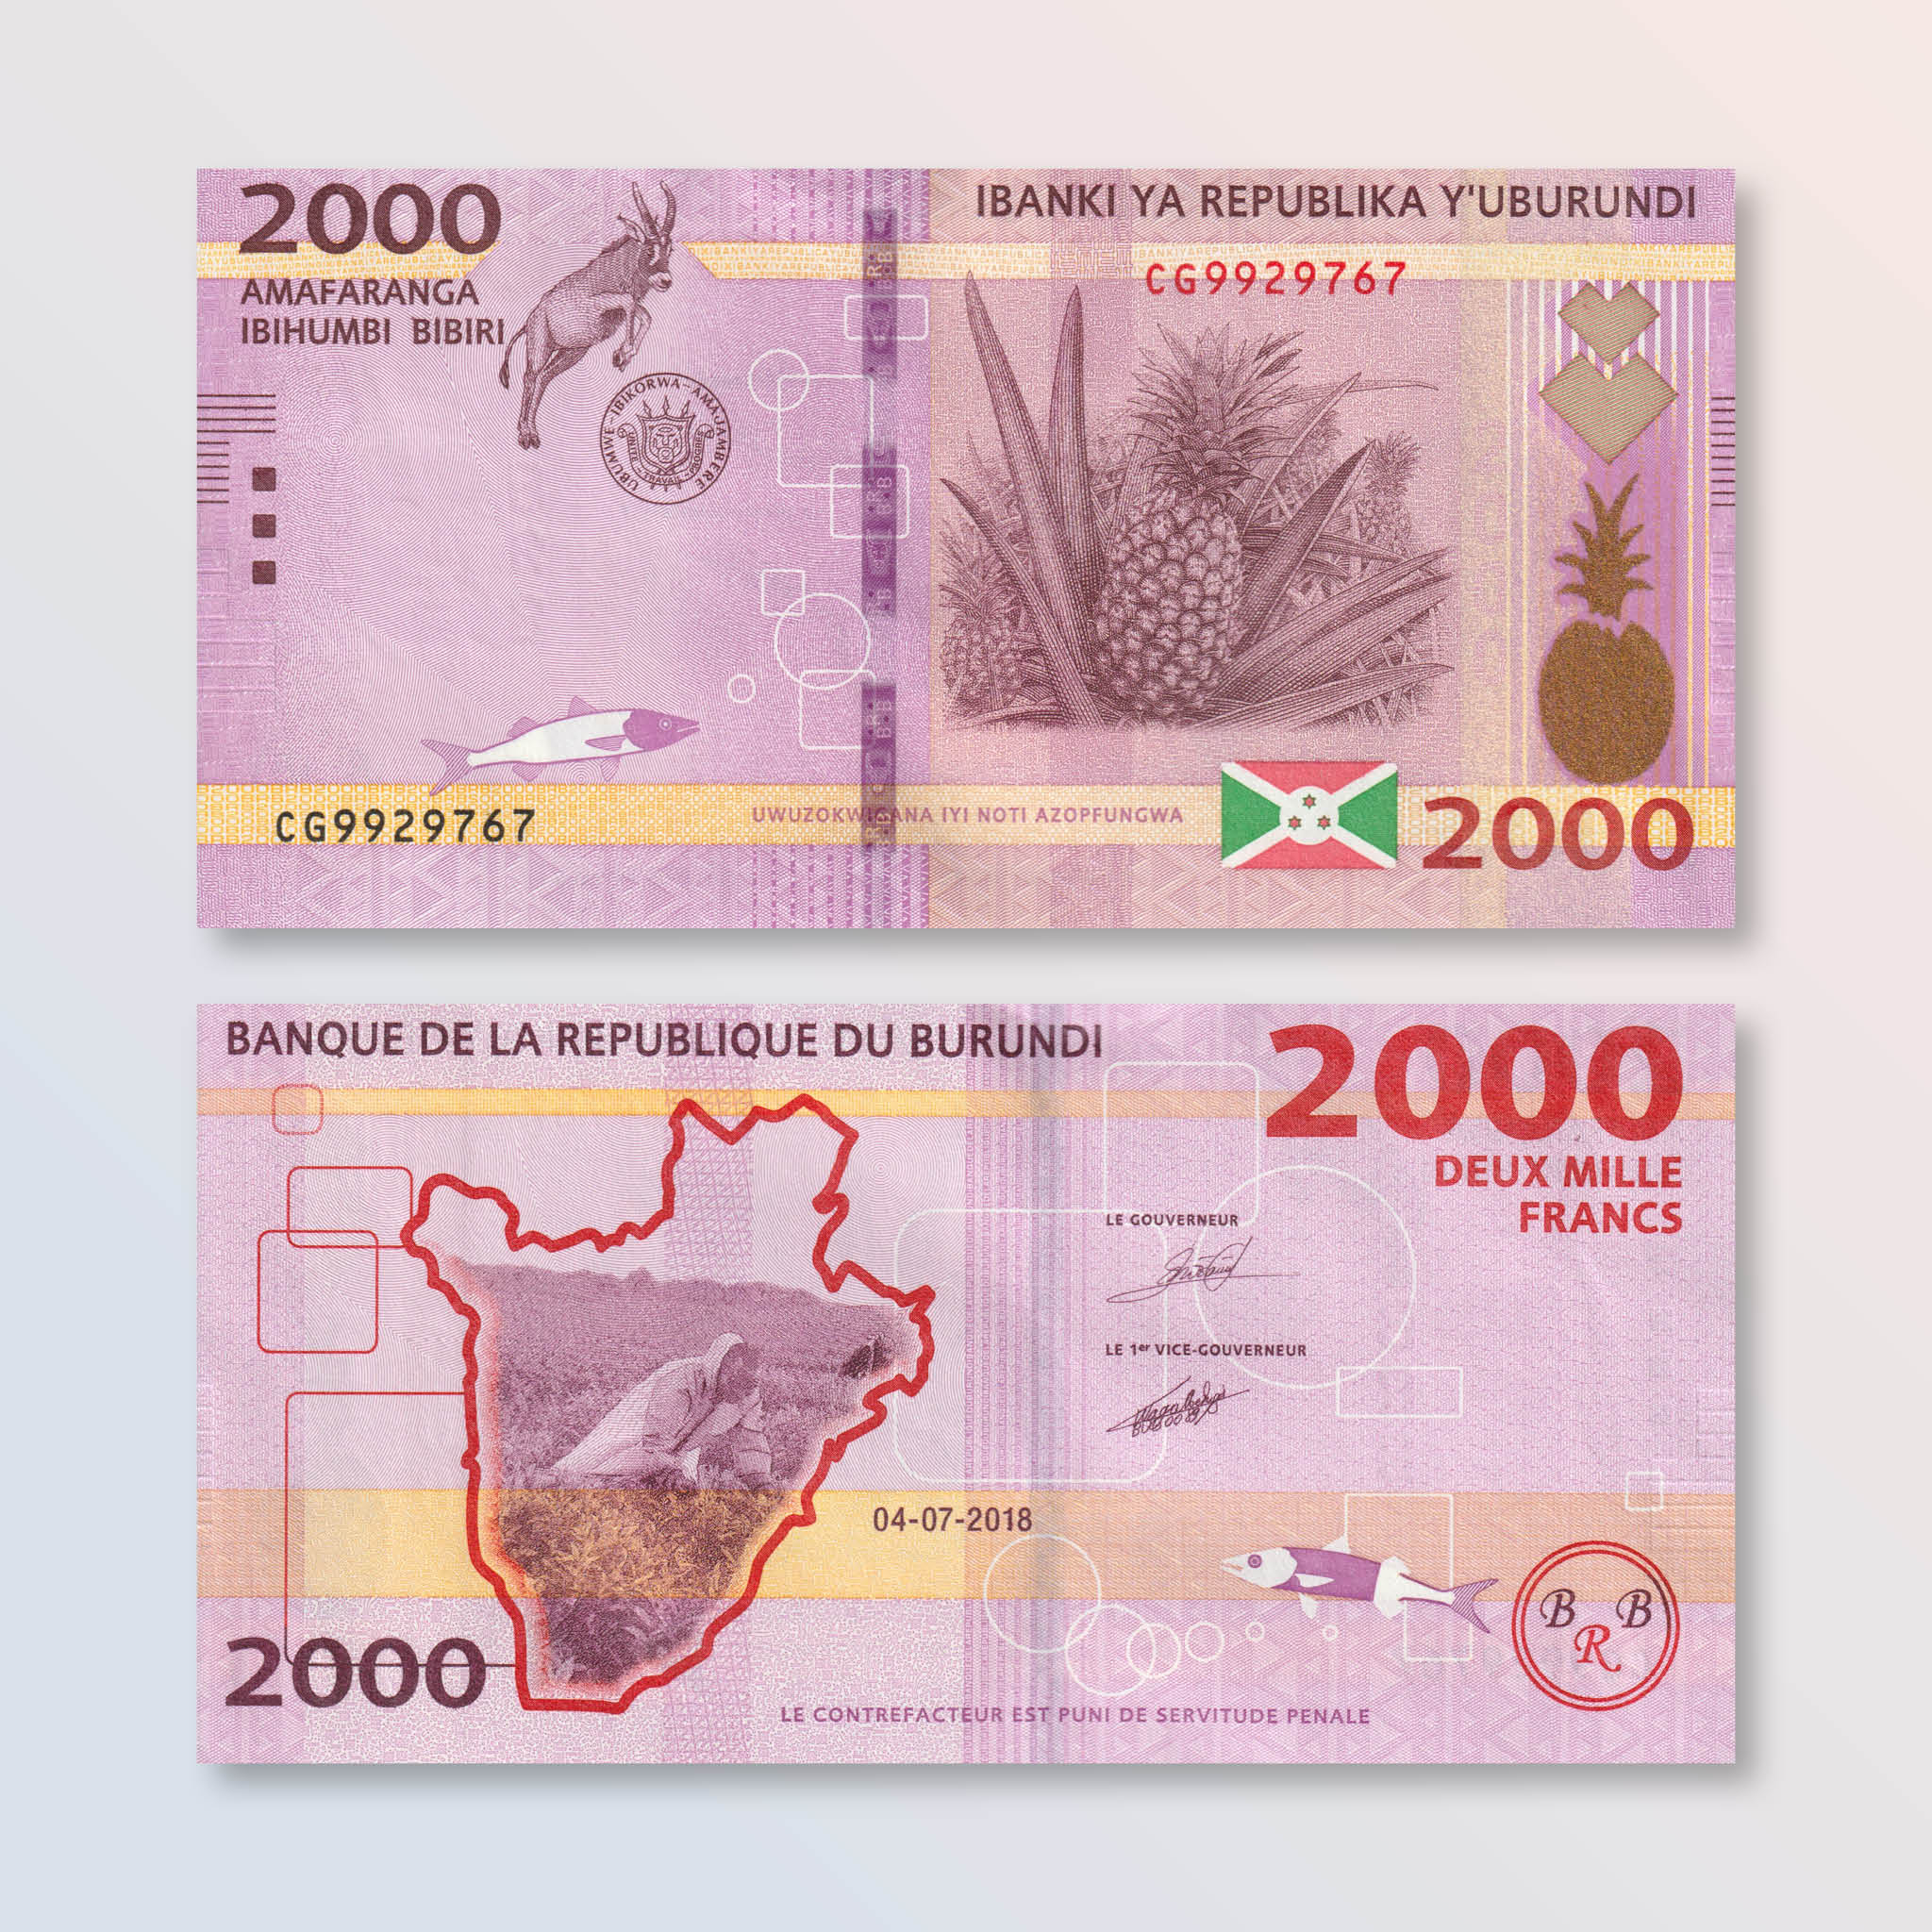 Burundi 2000 Francs, 2018, B238b, P52, UNC - Robert's World Money - World Banknotes